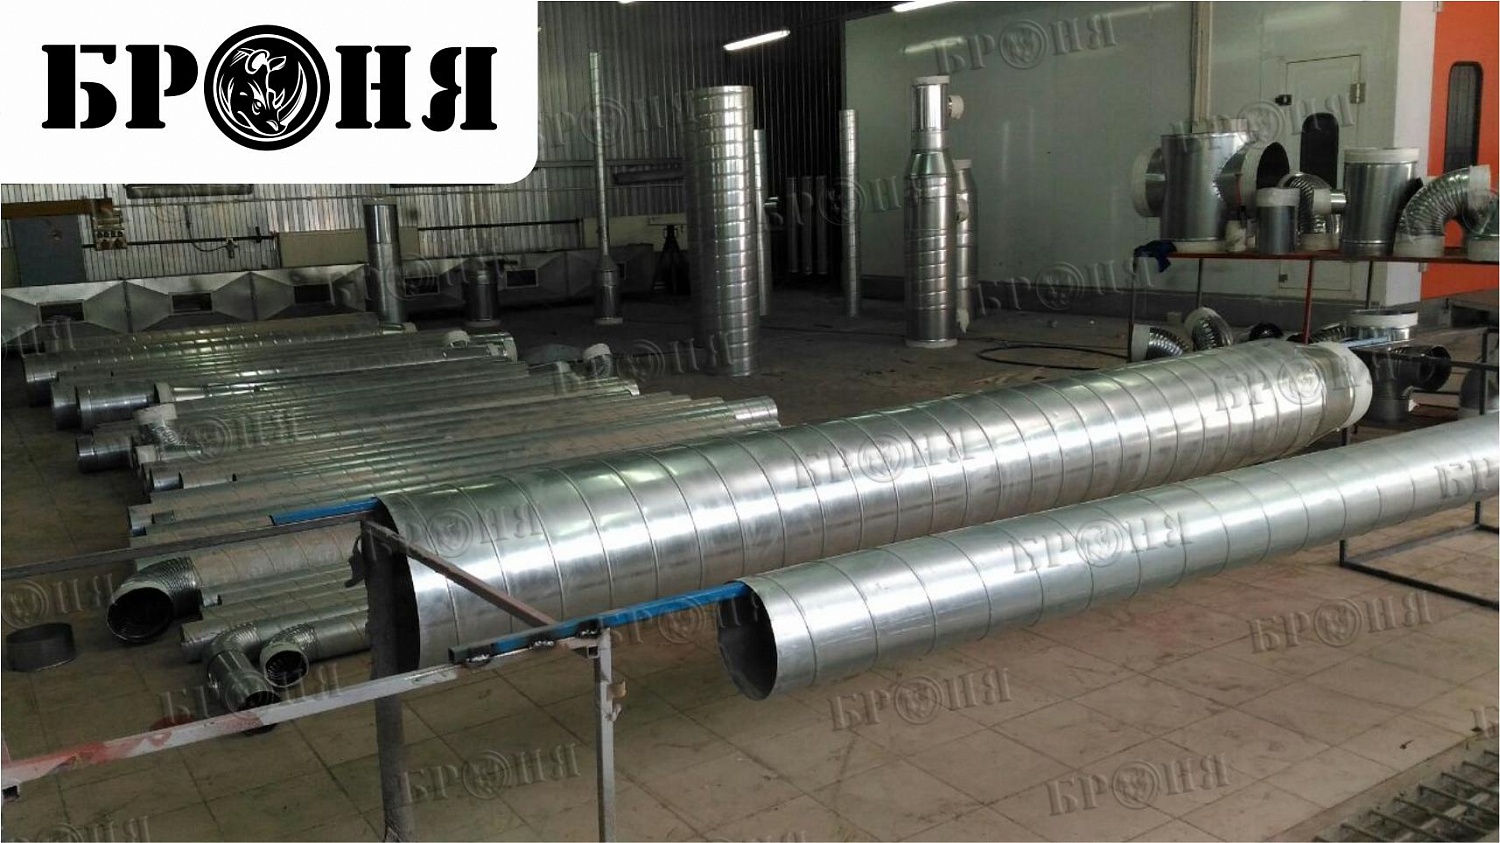  Ryazan, insulation of the ventilation pipe